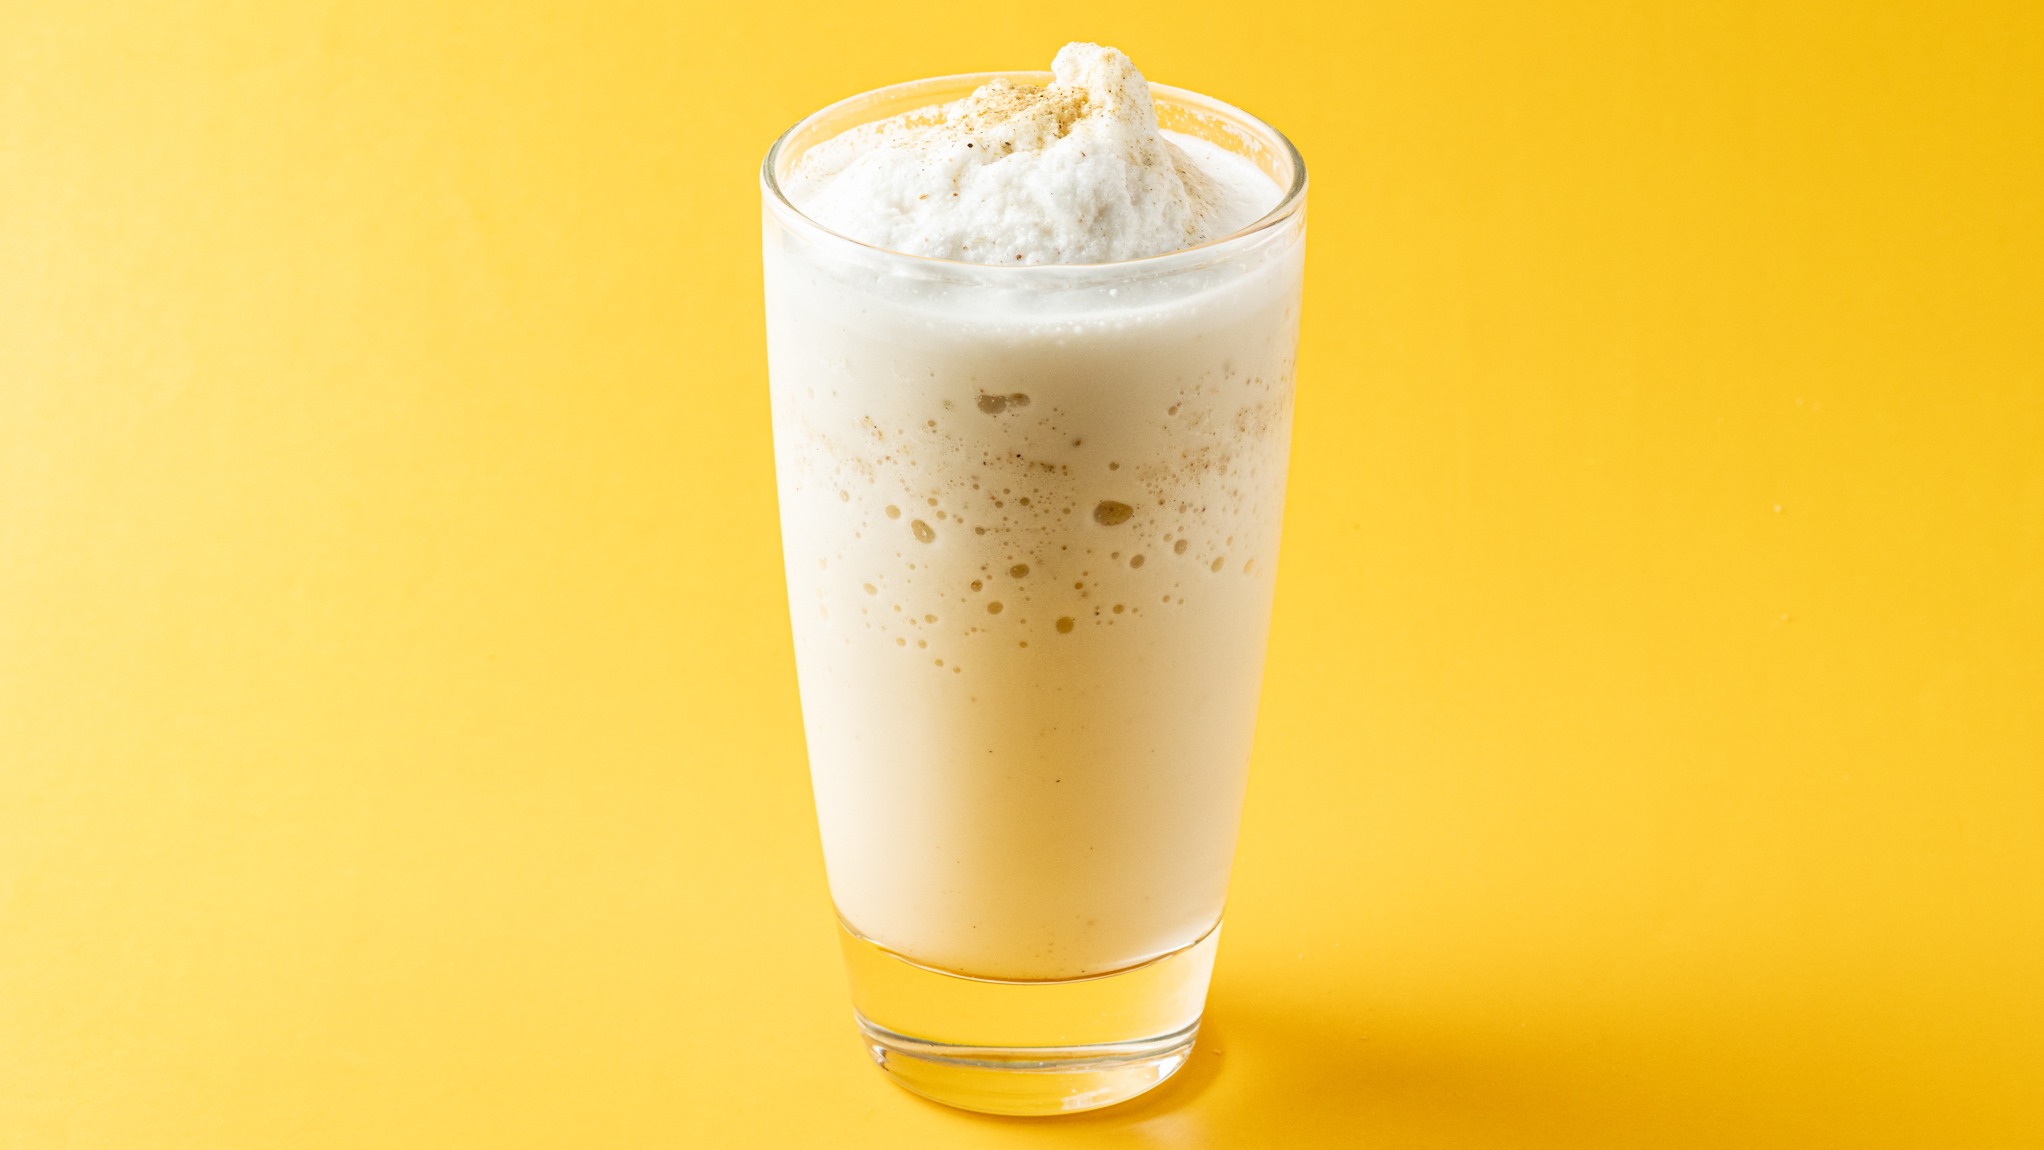 
Vegan Coconut Milk shake
